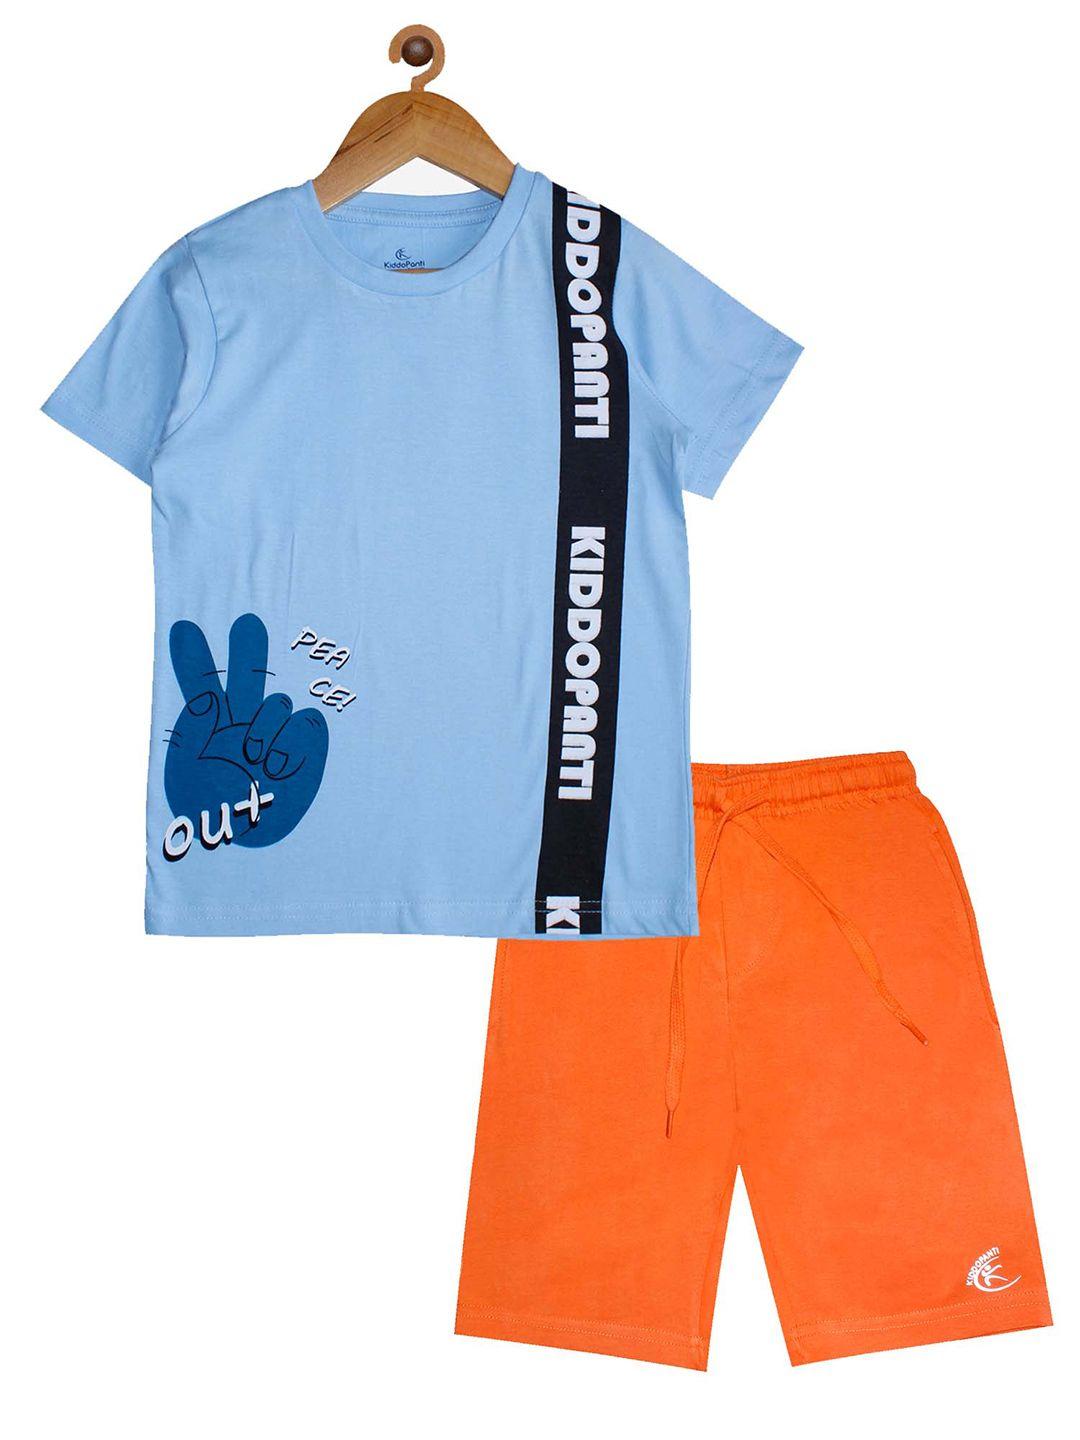 kiddopanti boys blue & orange printed t-shirt with shorts